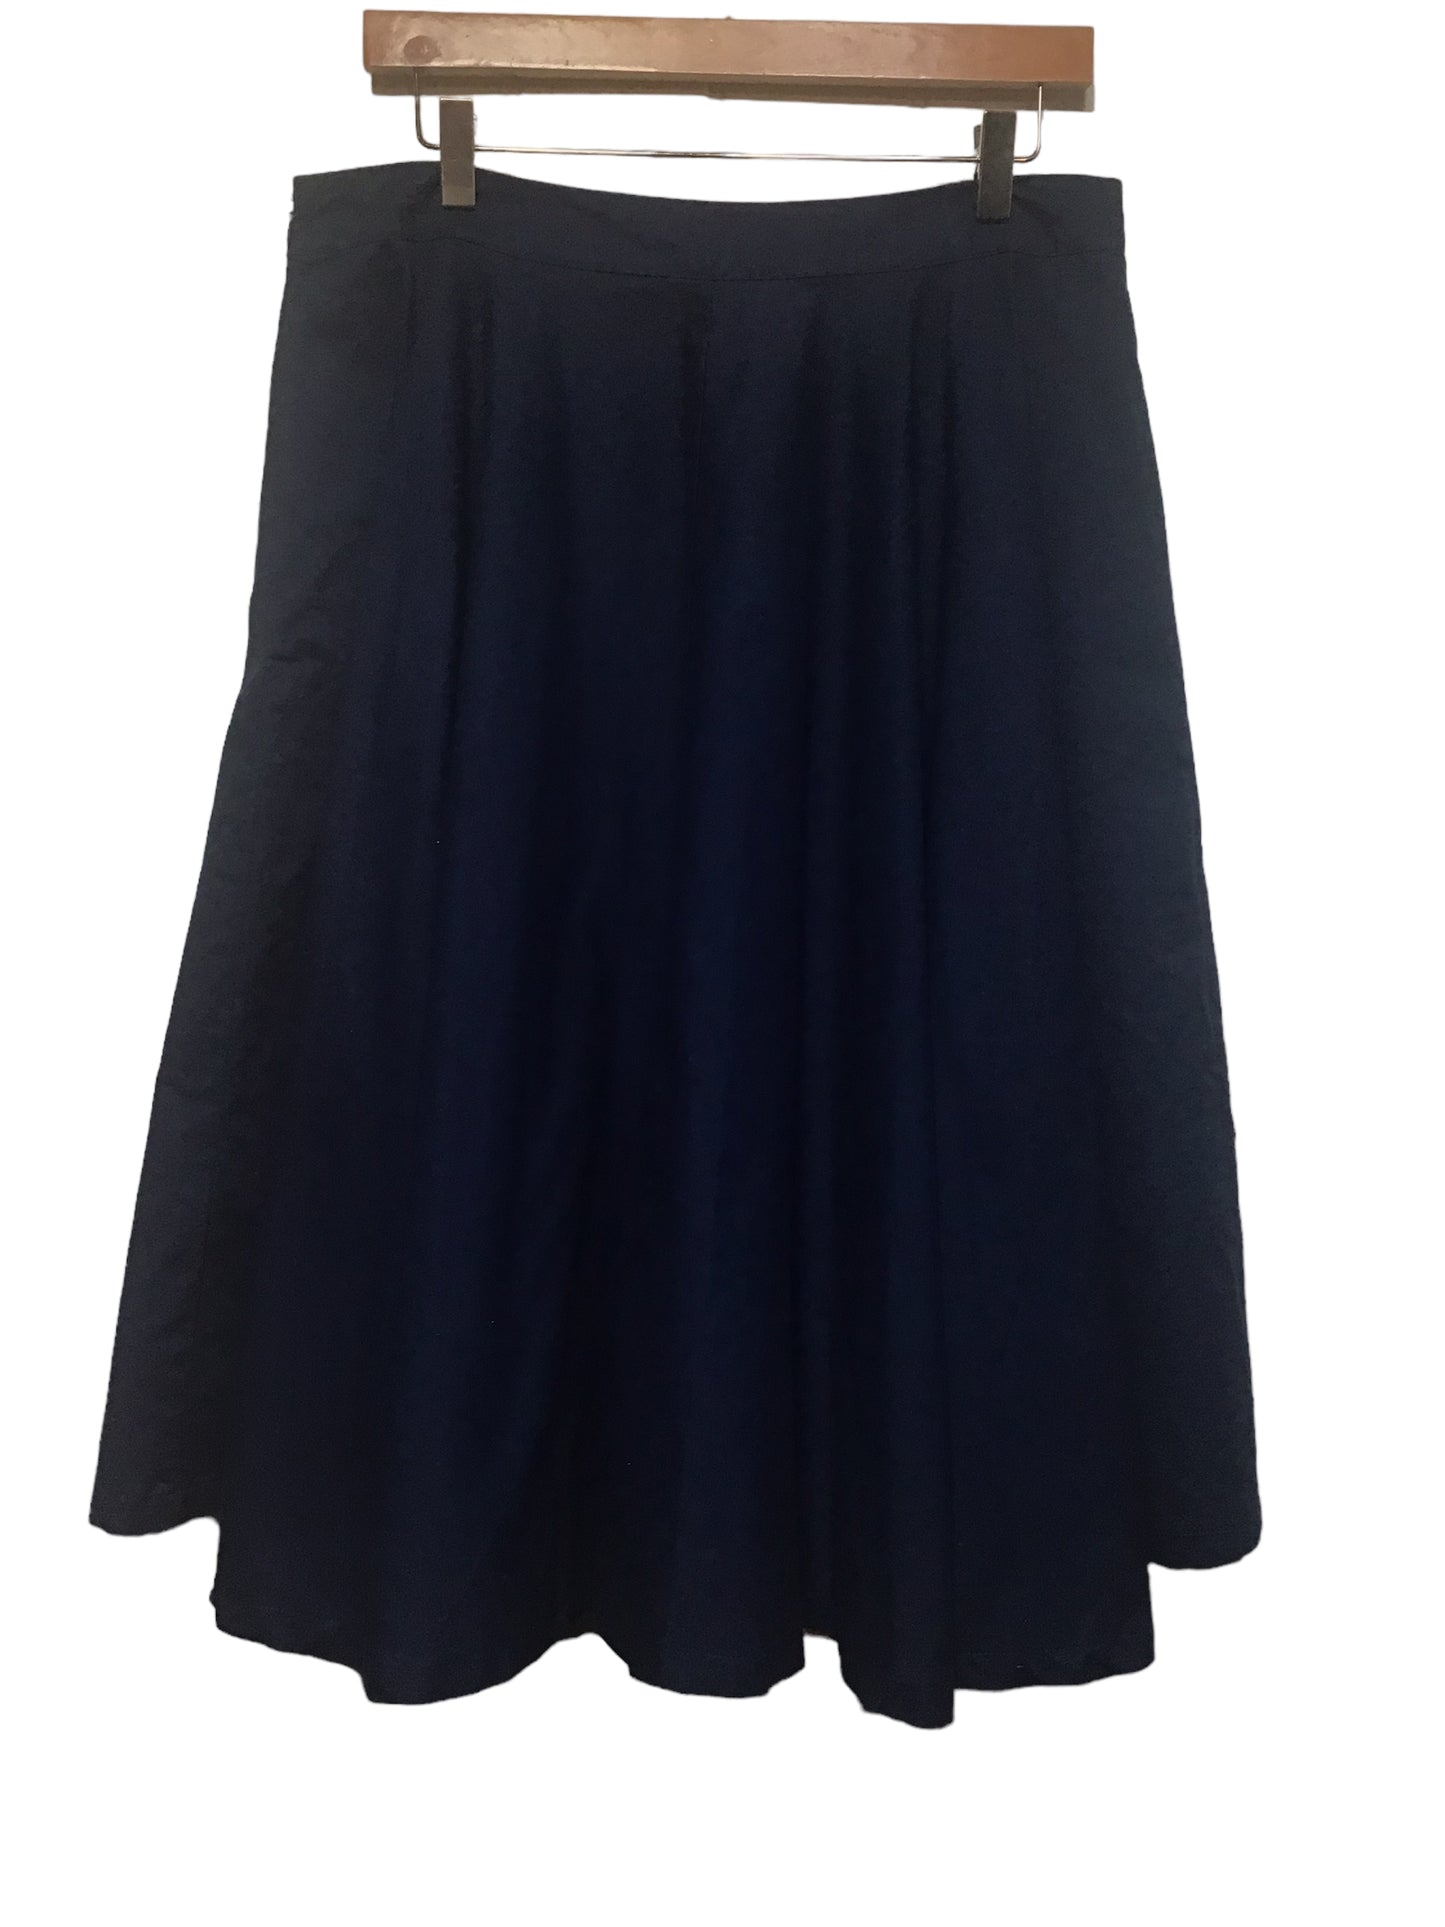 Lindy Bop Skirt (Size XL)